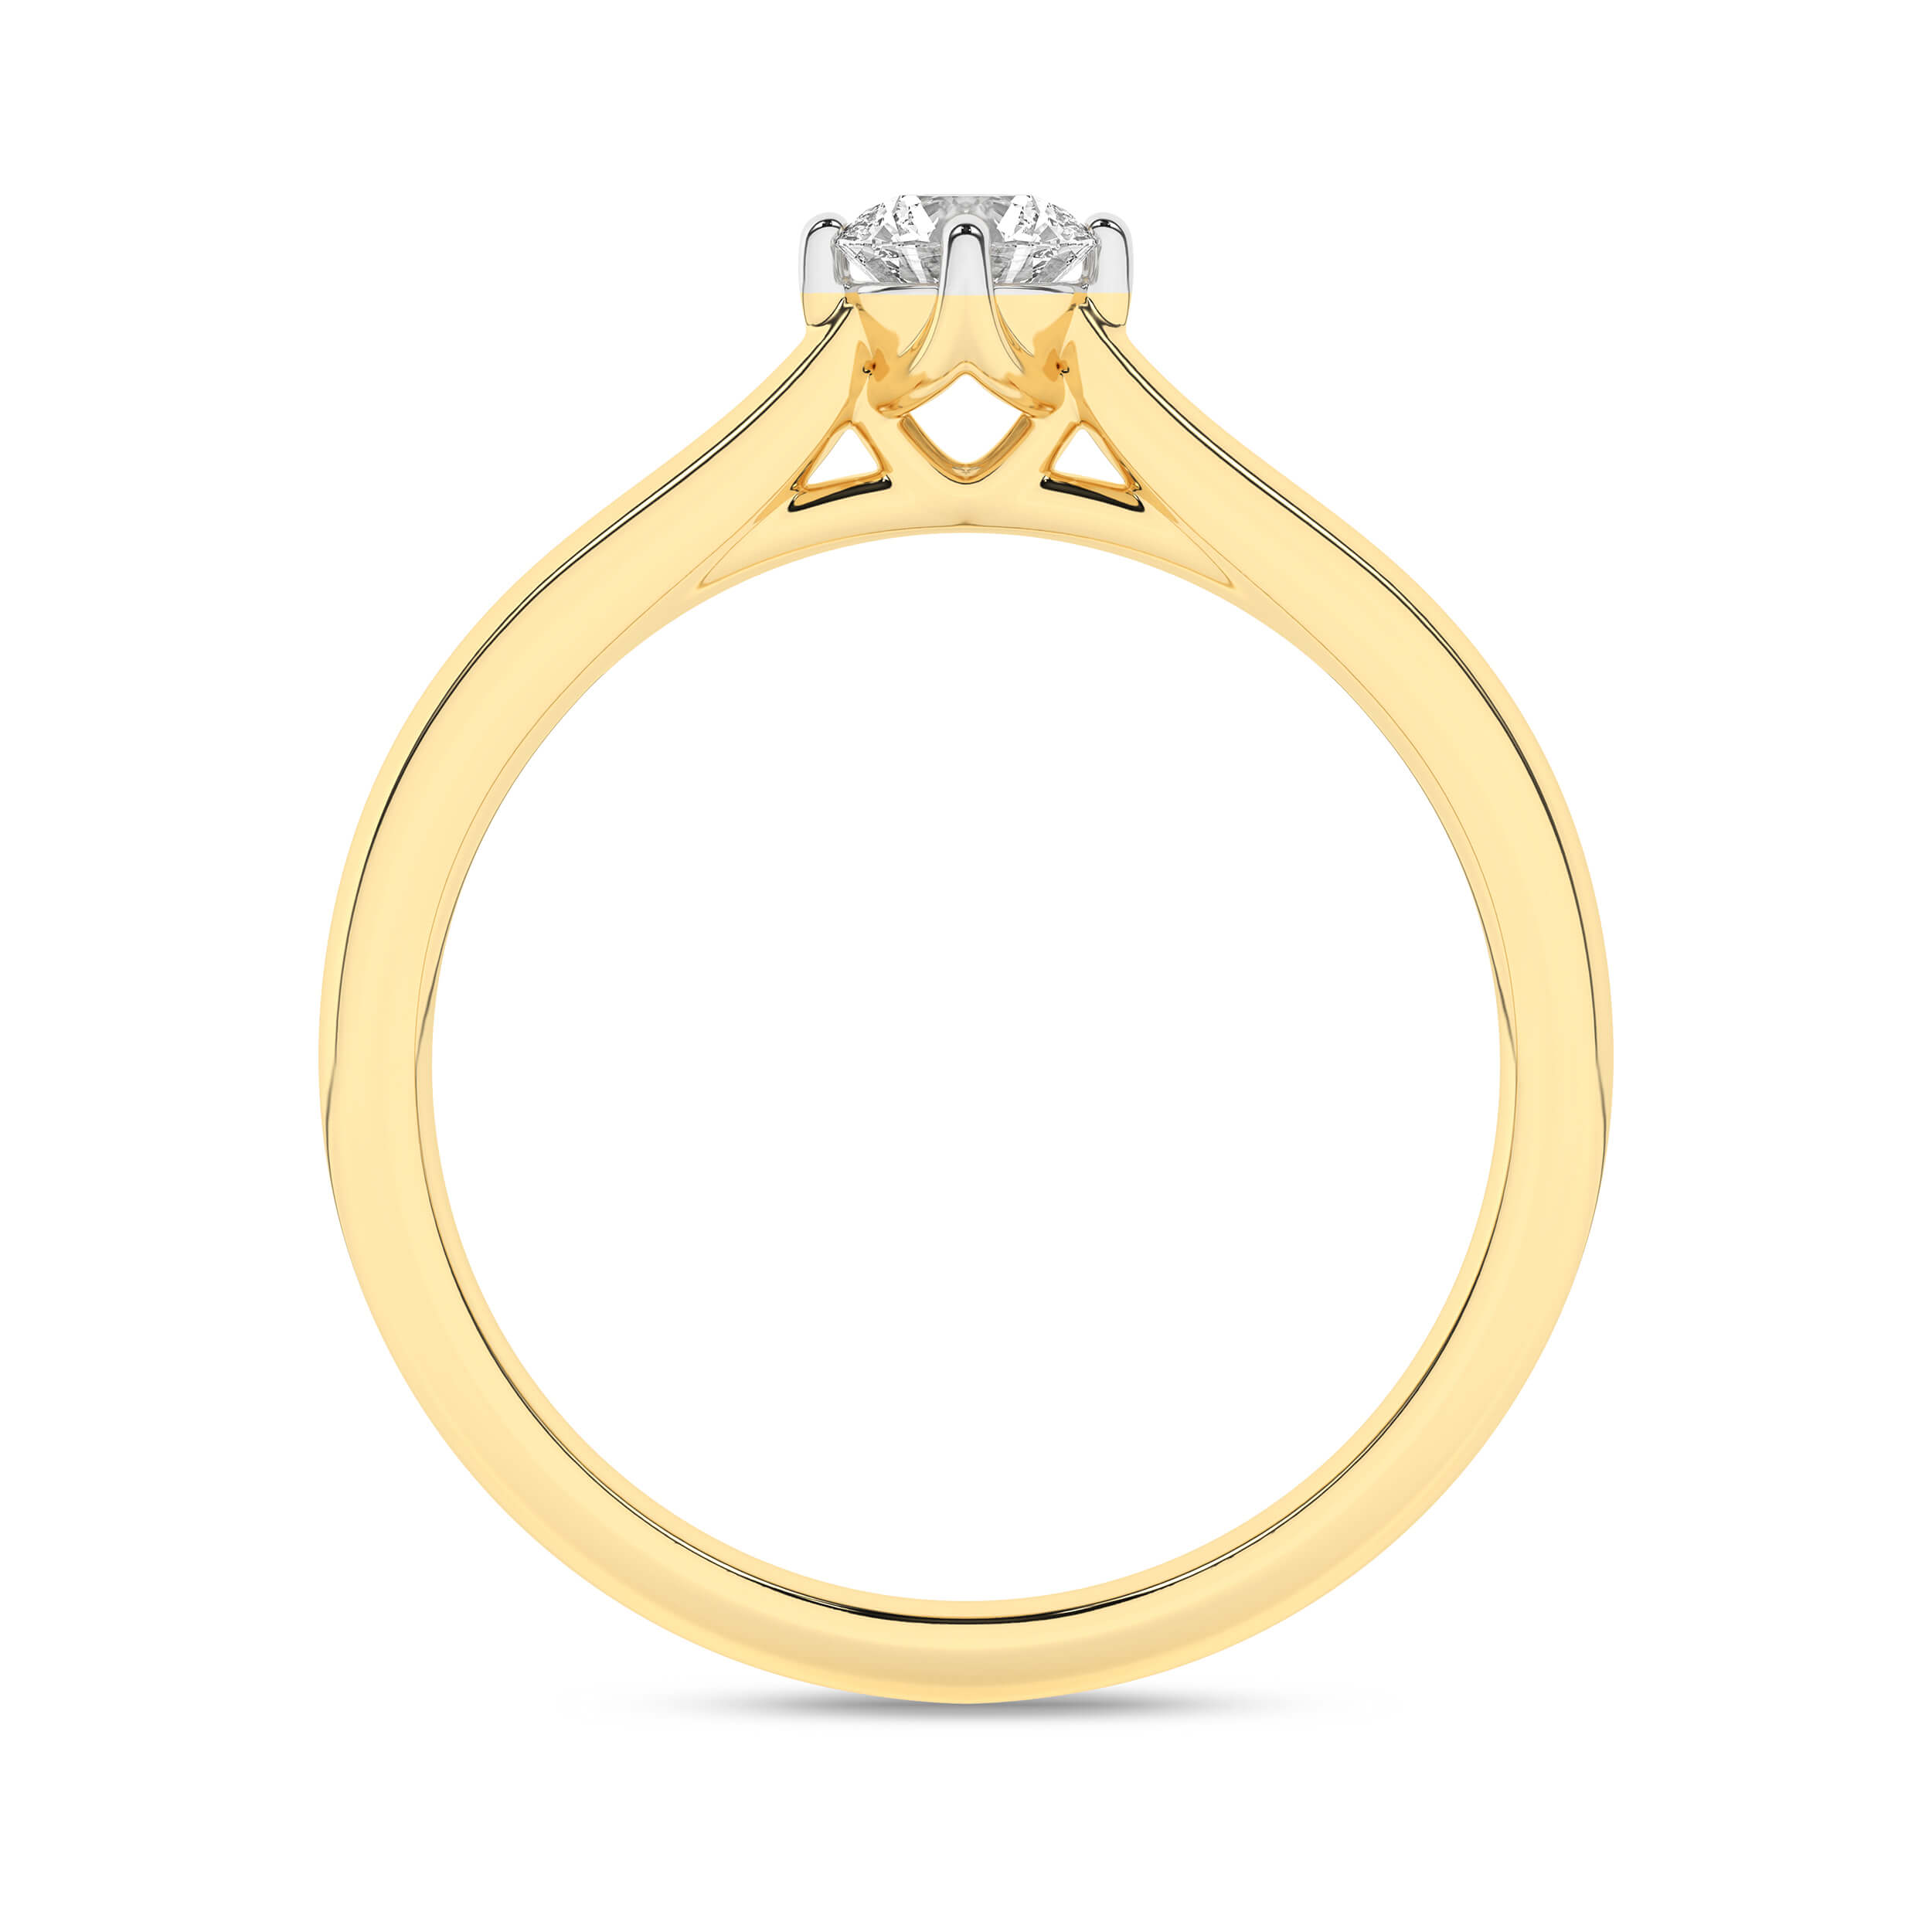 Inel de logodna din Aur Galben 14K cu Diamant 0.25Ct, articol RS1441, previzualizare foto 1